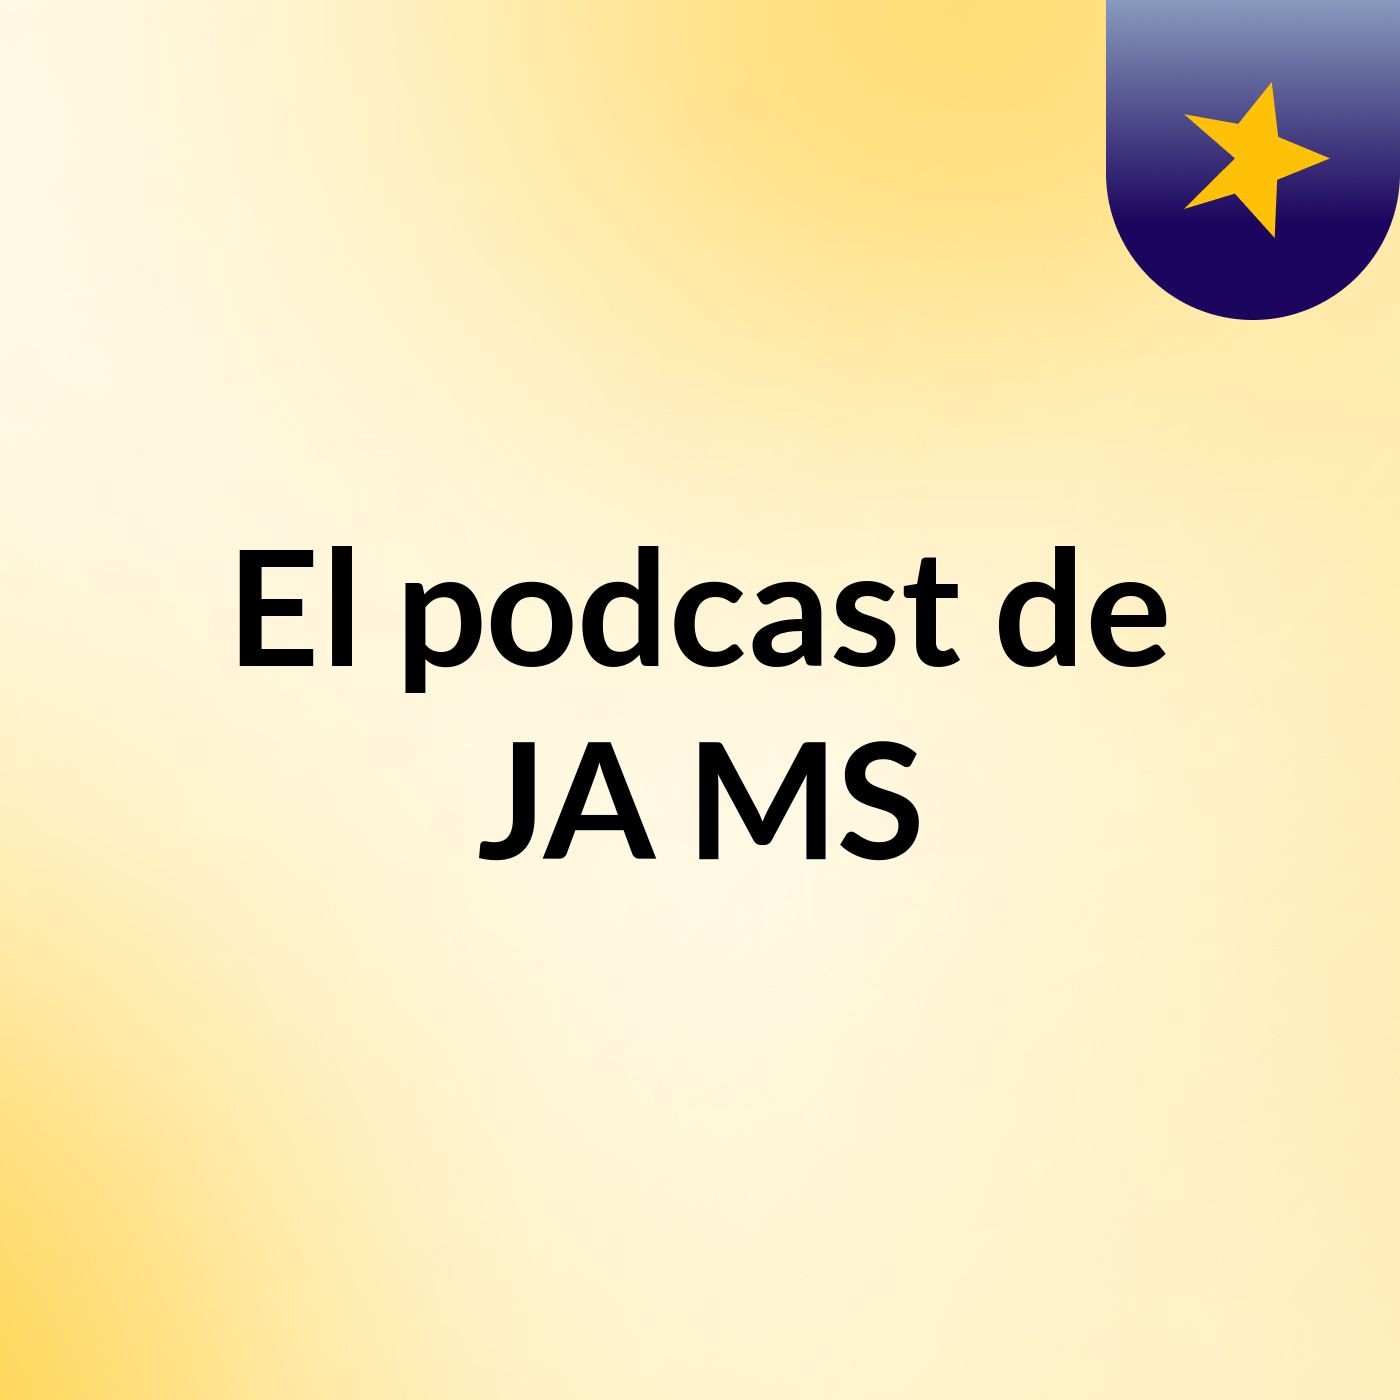 Episodio 4 - El podcast de JA MS